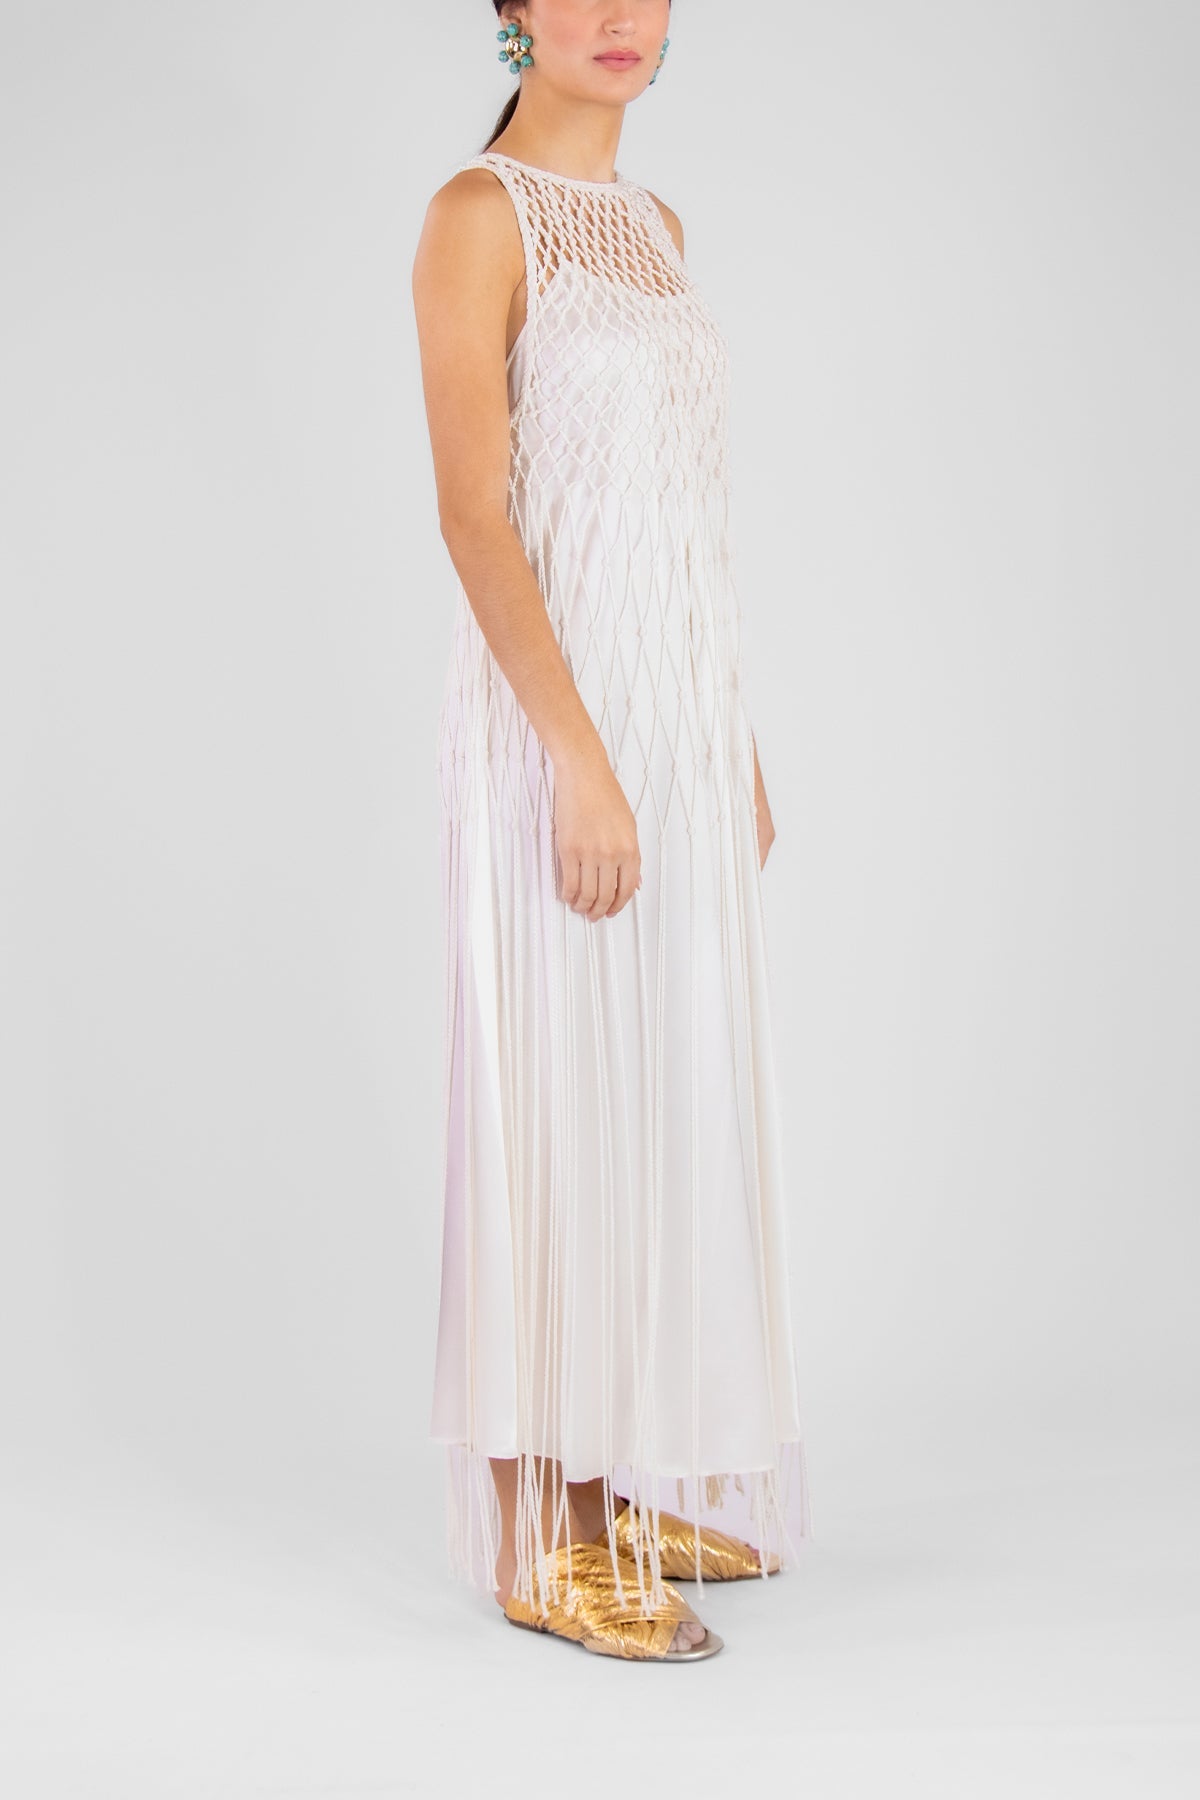 Shining Satin Slip Dress in White - shop-olivia.com